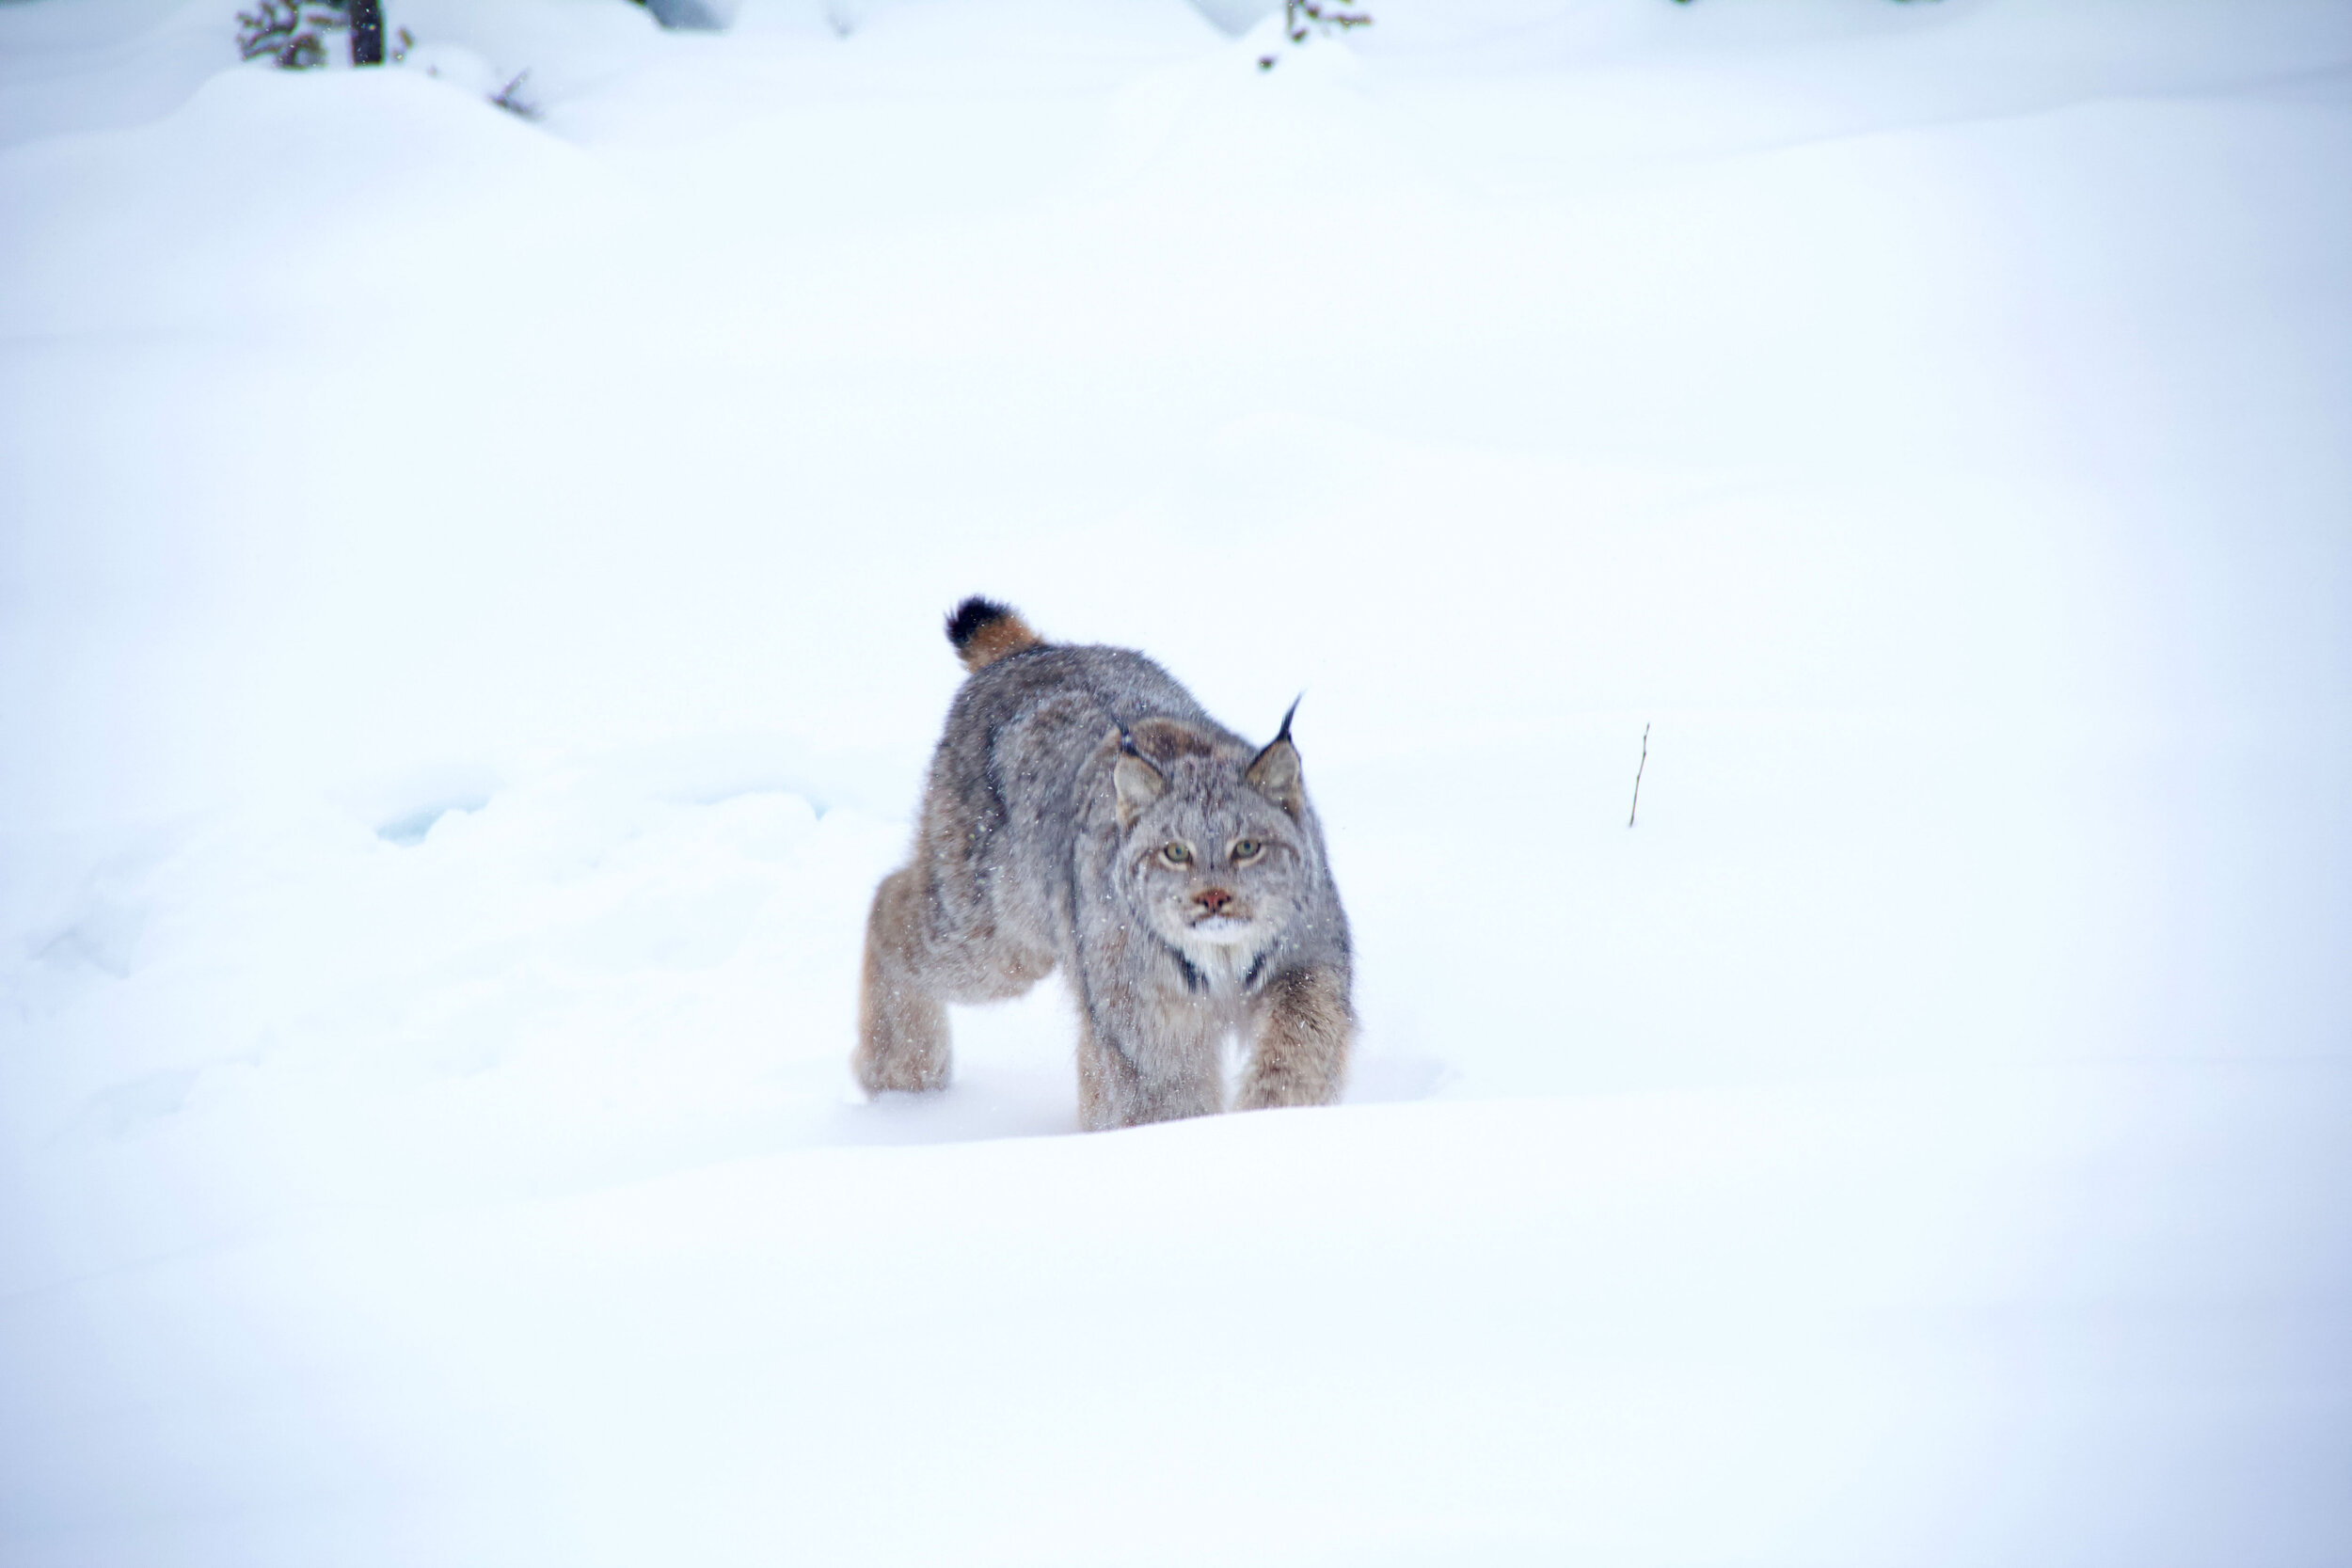  A female lynx moving through snow toward the viewer.  